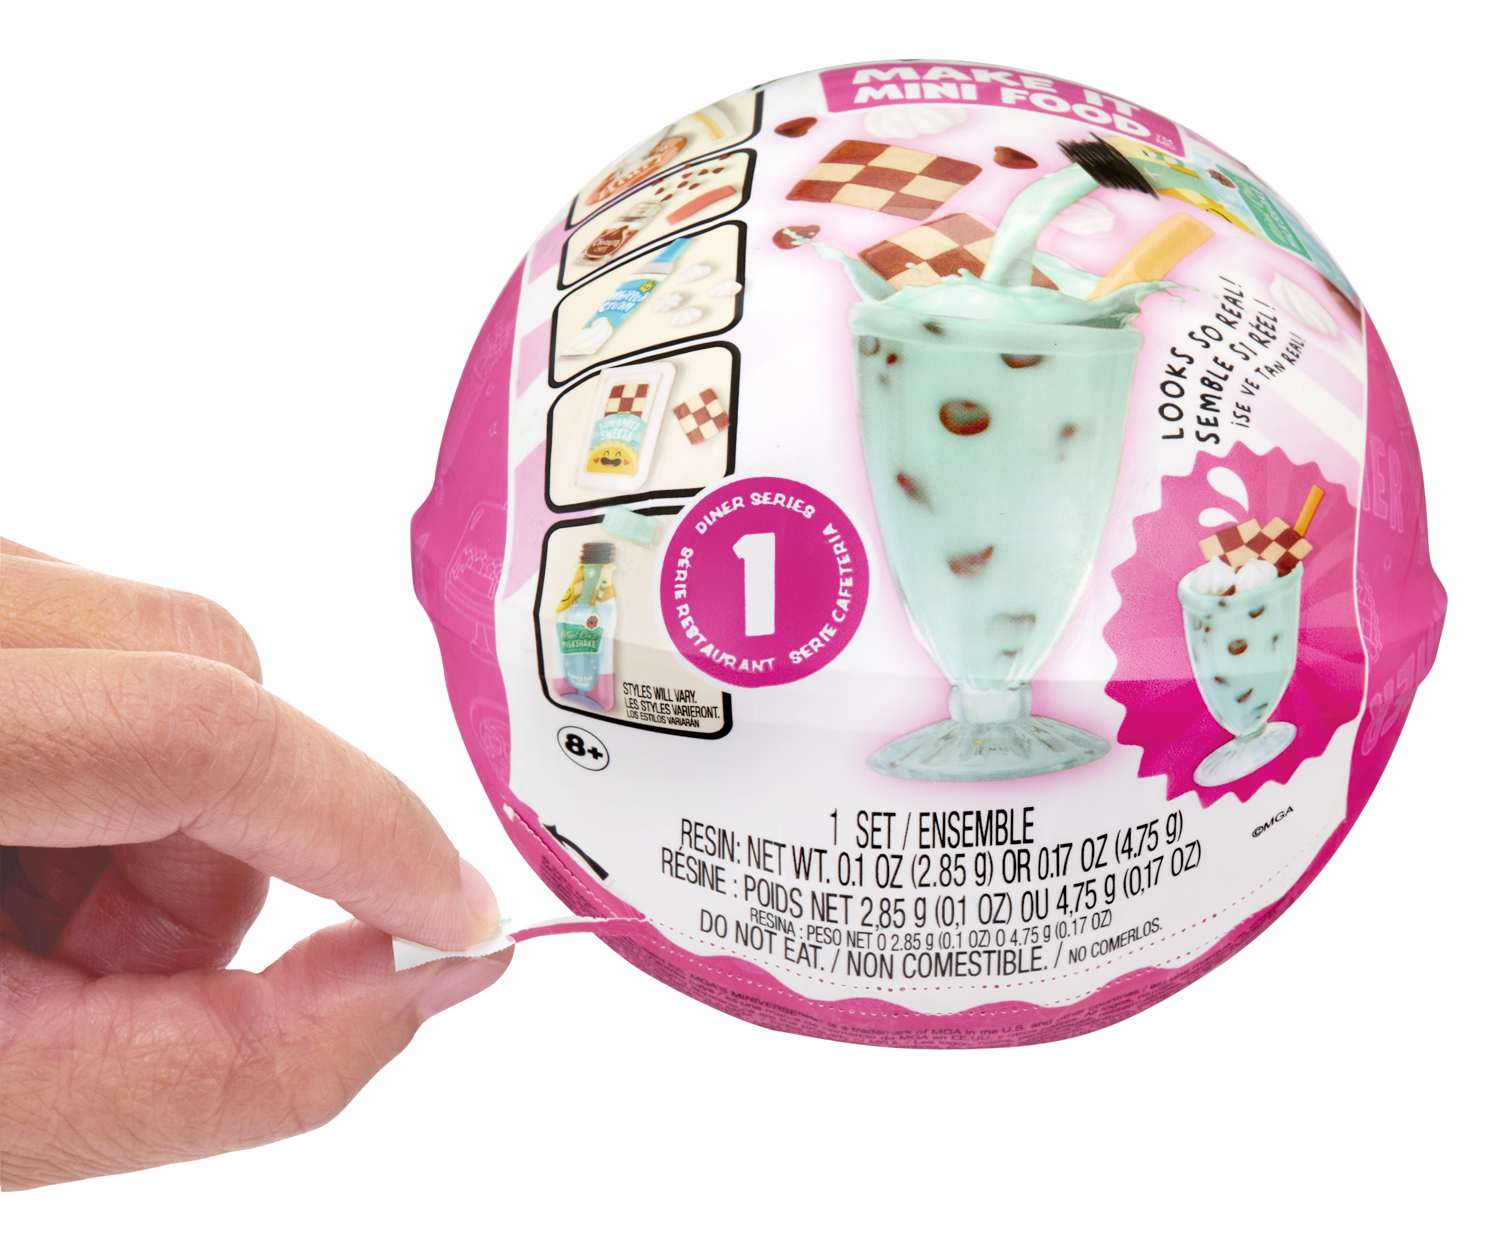 MGA's Make It Mini Food Diner Ice Cream Shop – L.O.L. Surprise